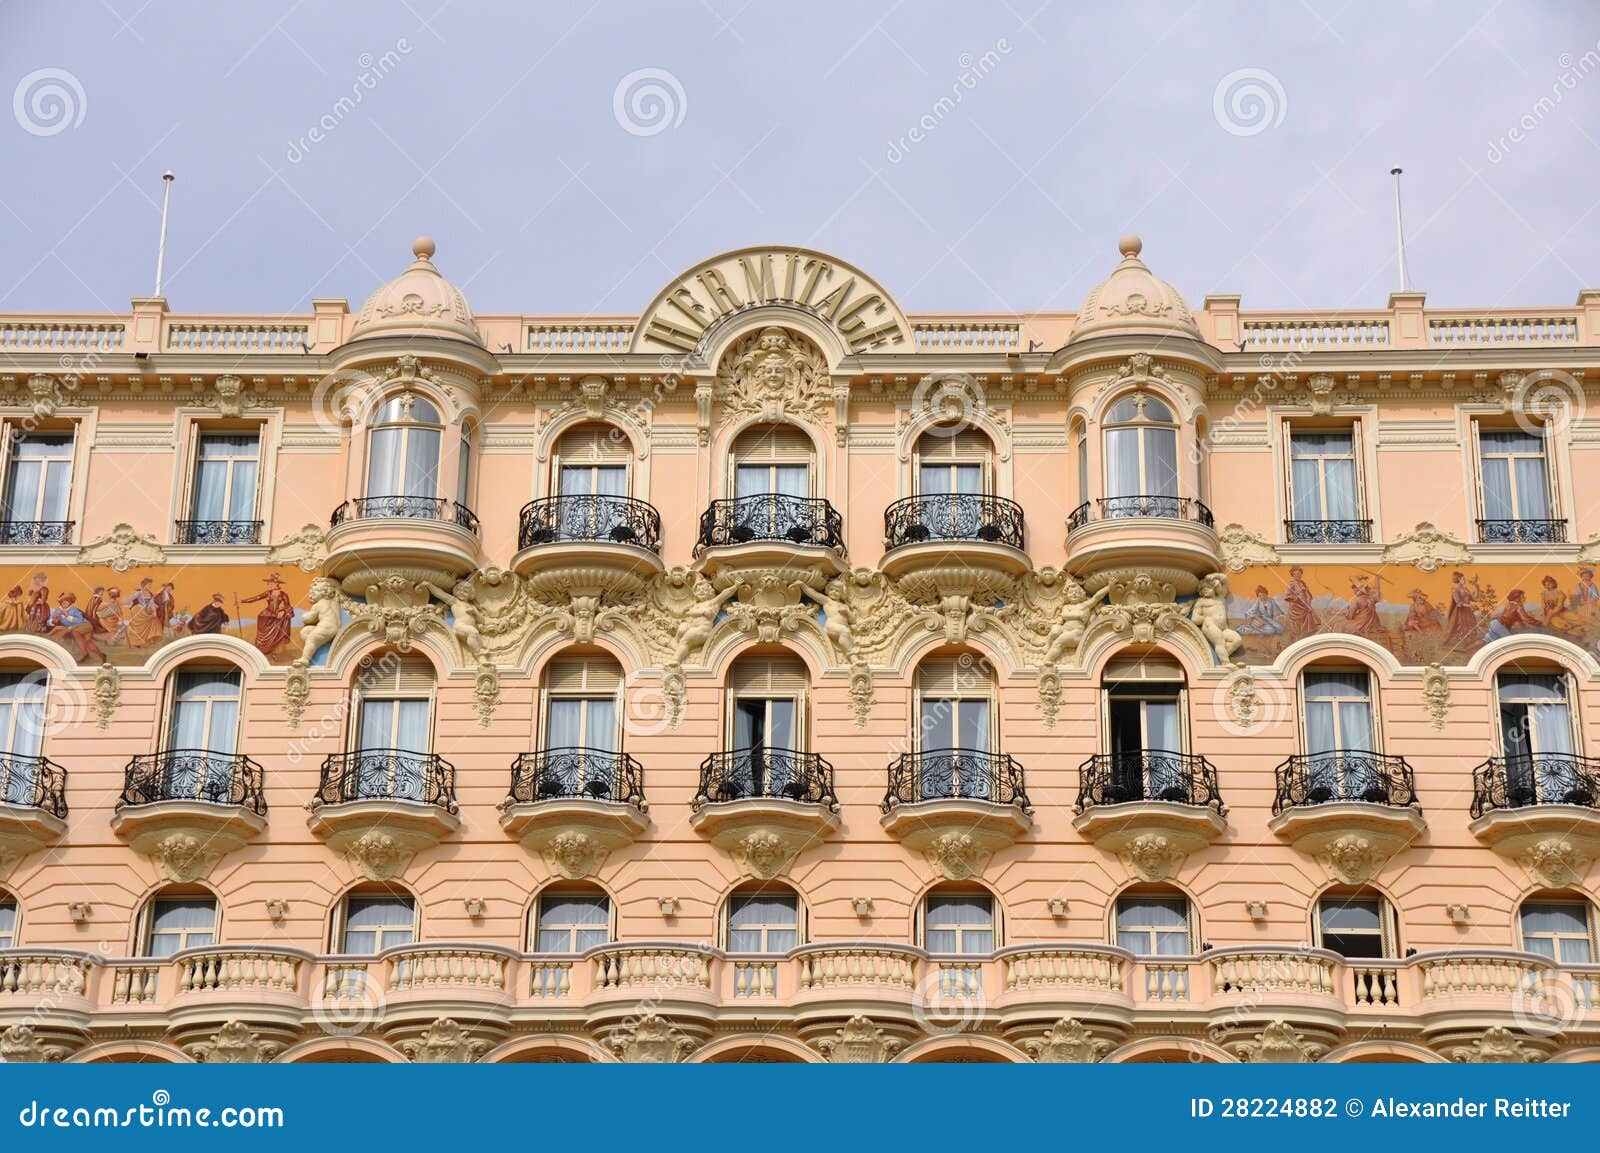 luxury hotel l'hermitage in monte carlo, monaco